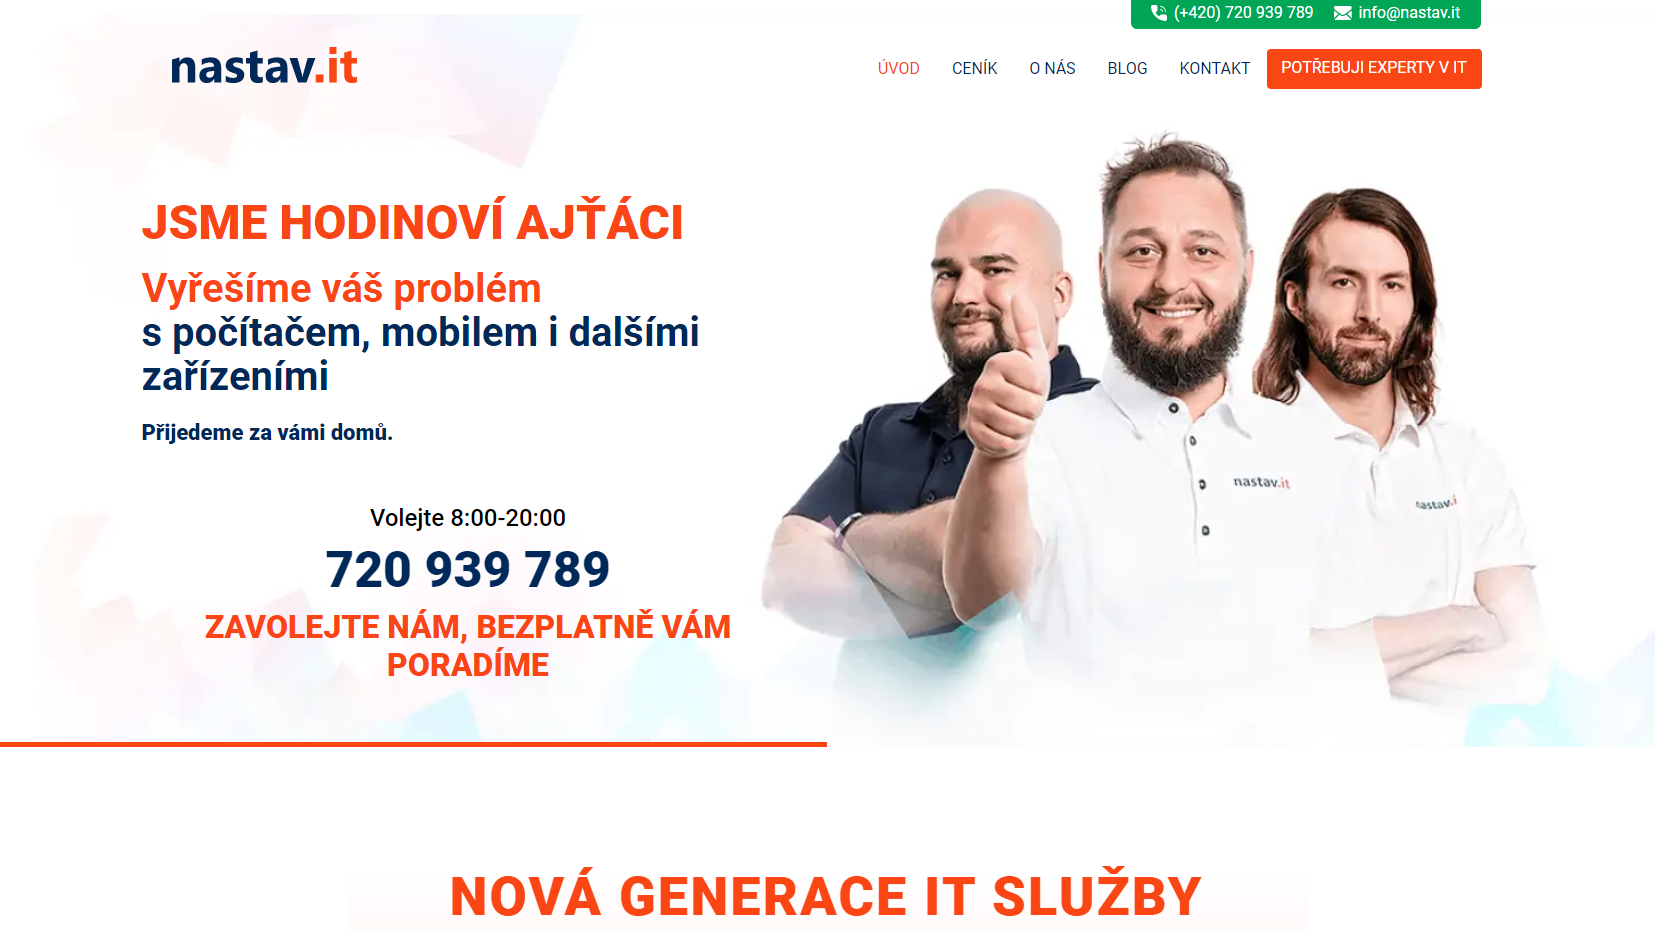 //www.webotvurci.cz/wp-content/uploads/2021/08/nastav1.png